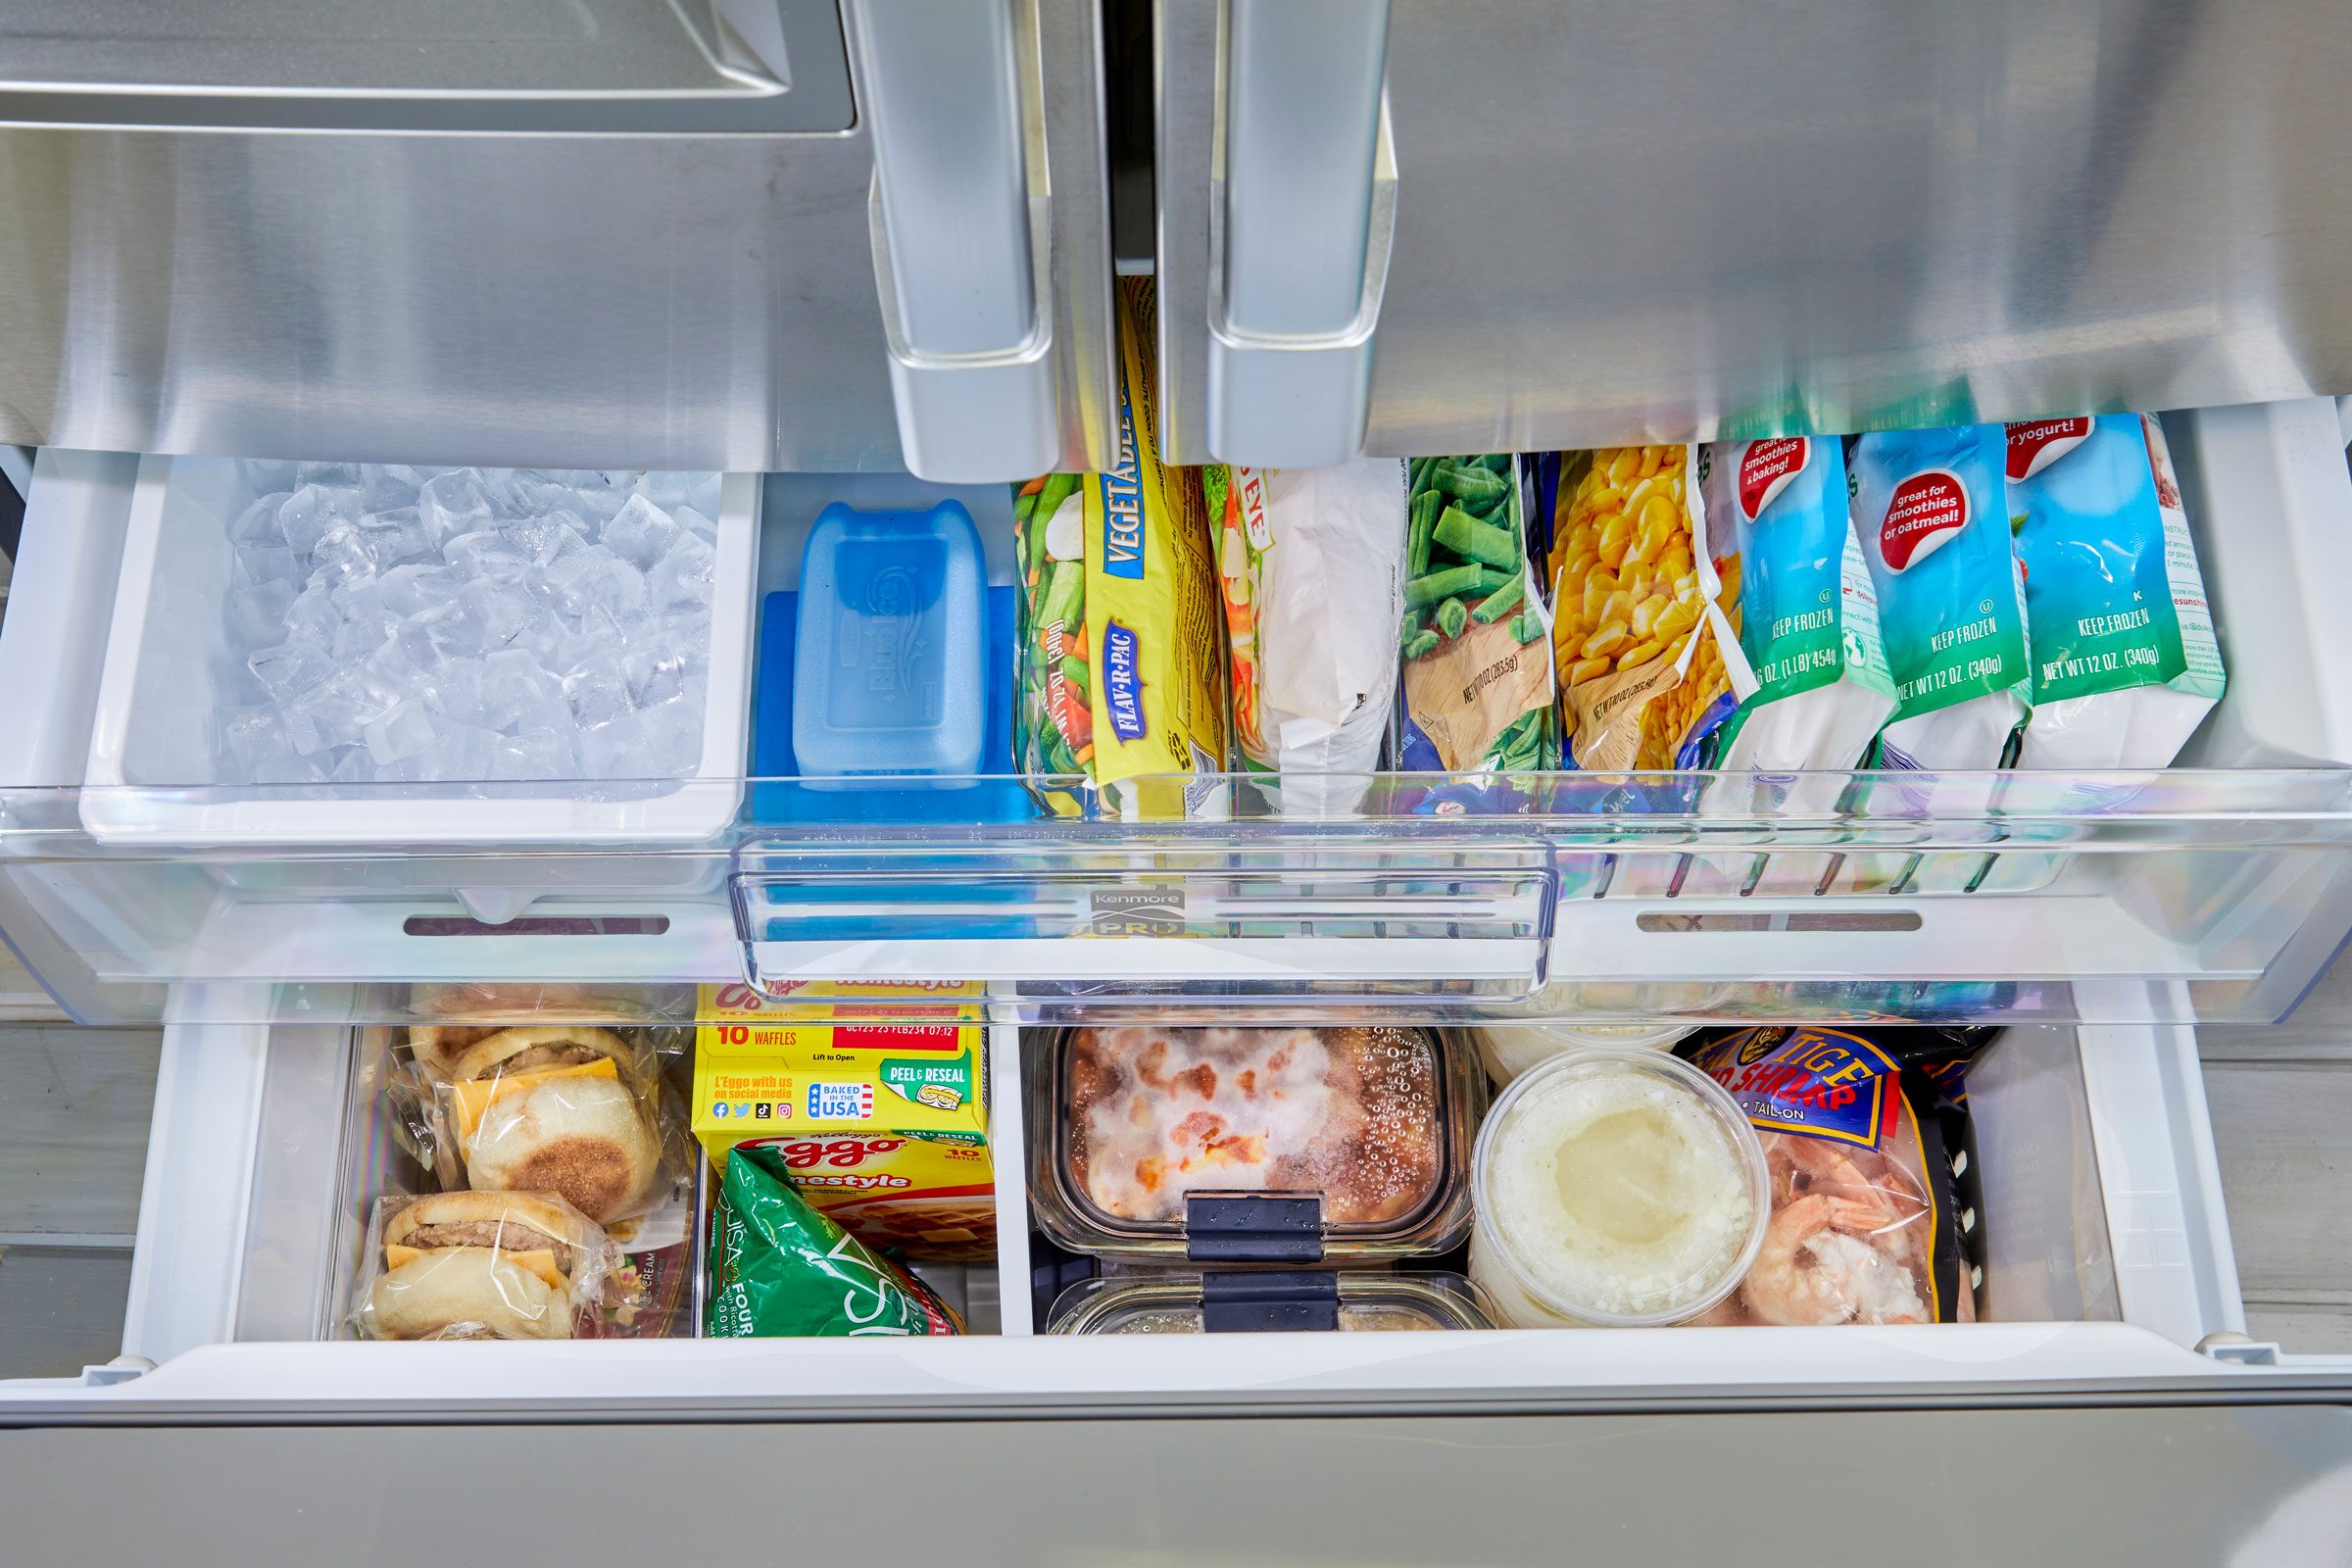 UPDATE: Can we talk fridge organization? : r/organization